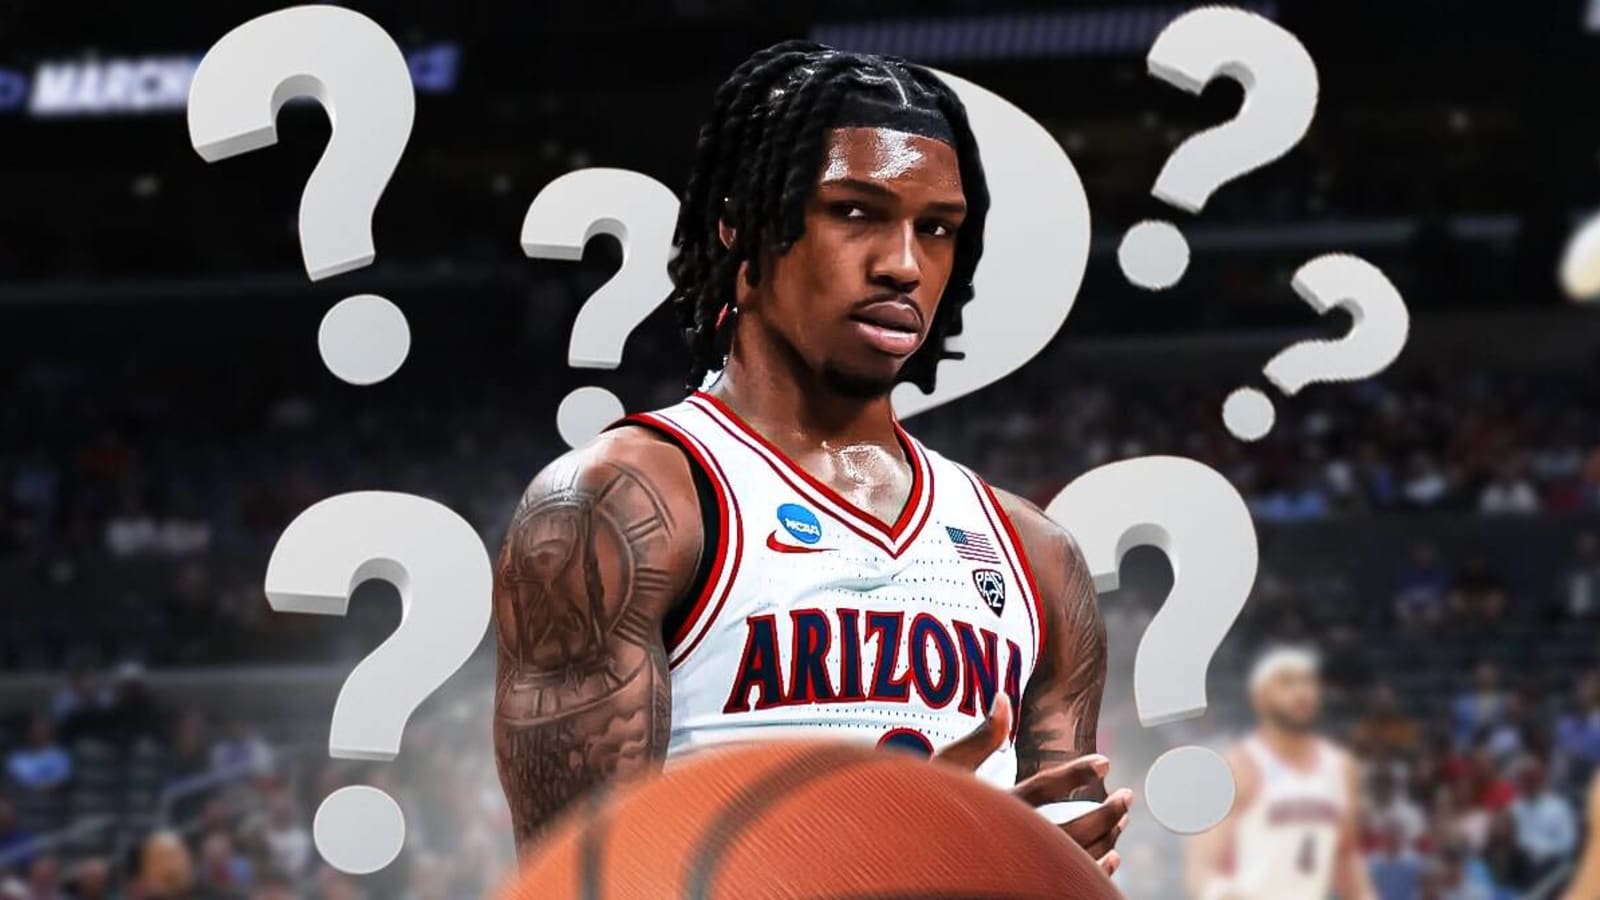 Arizona basketball’s Caleb Love NBA Draft mixup gets clarification